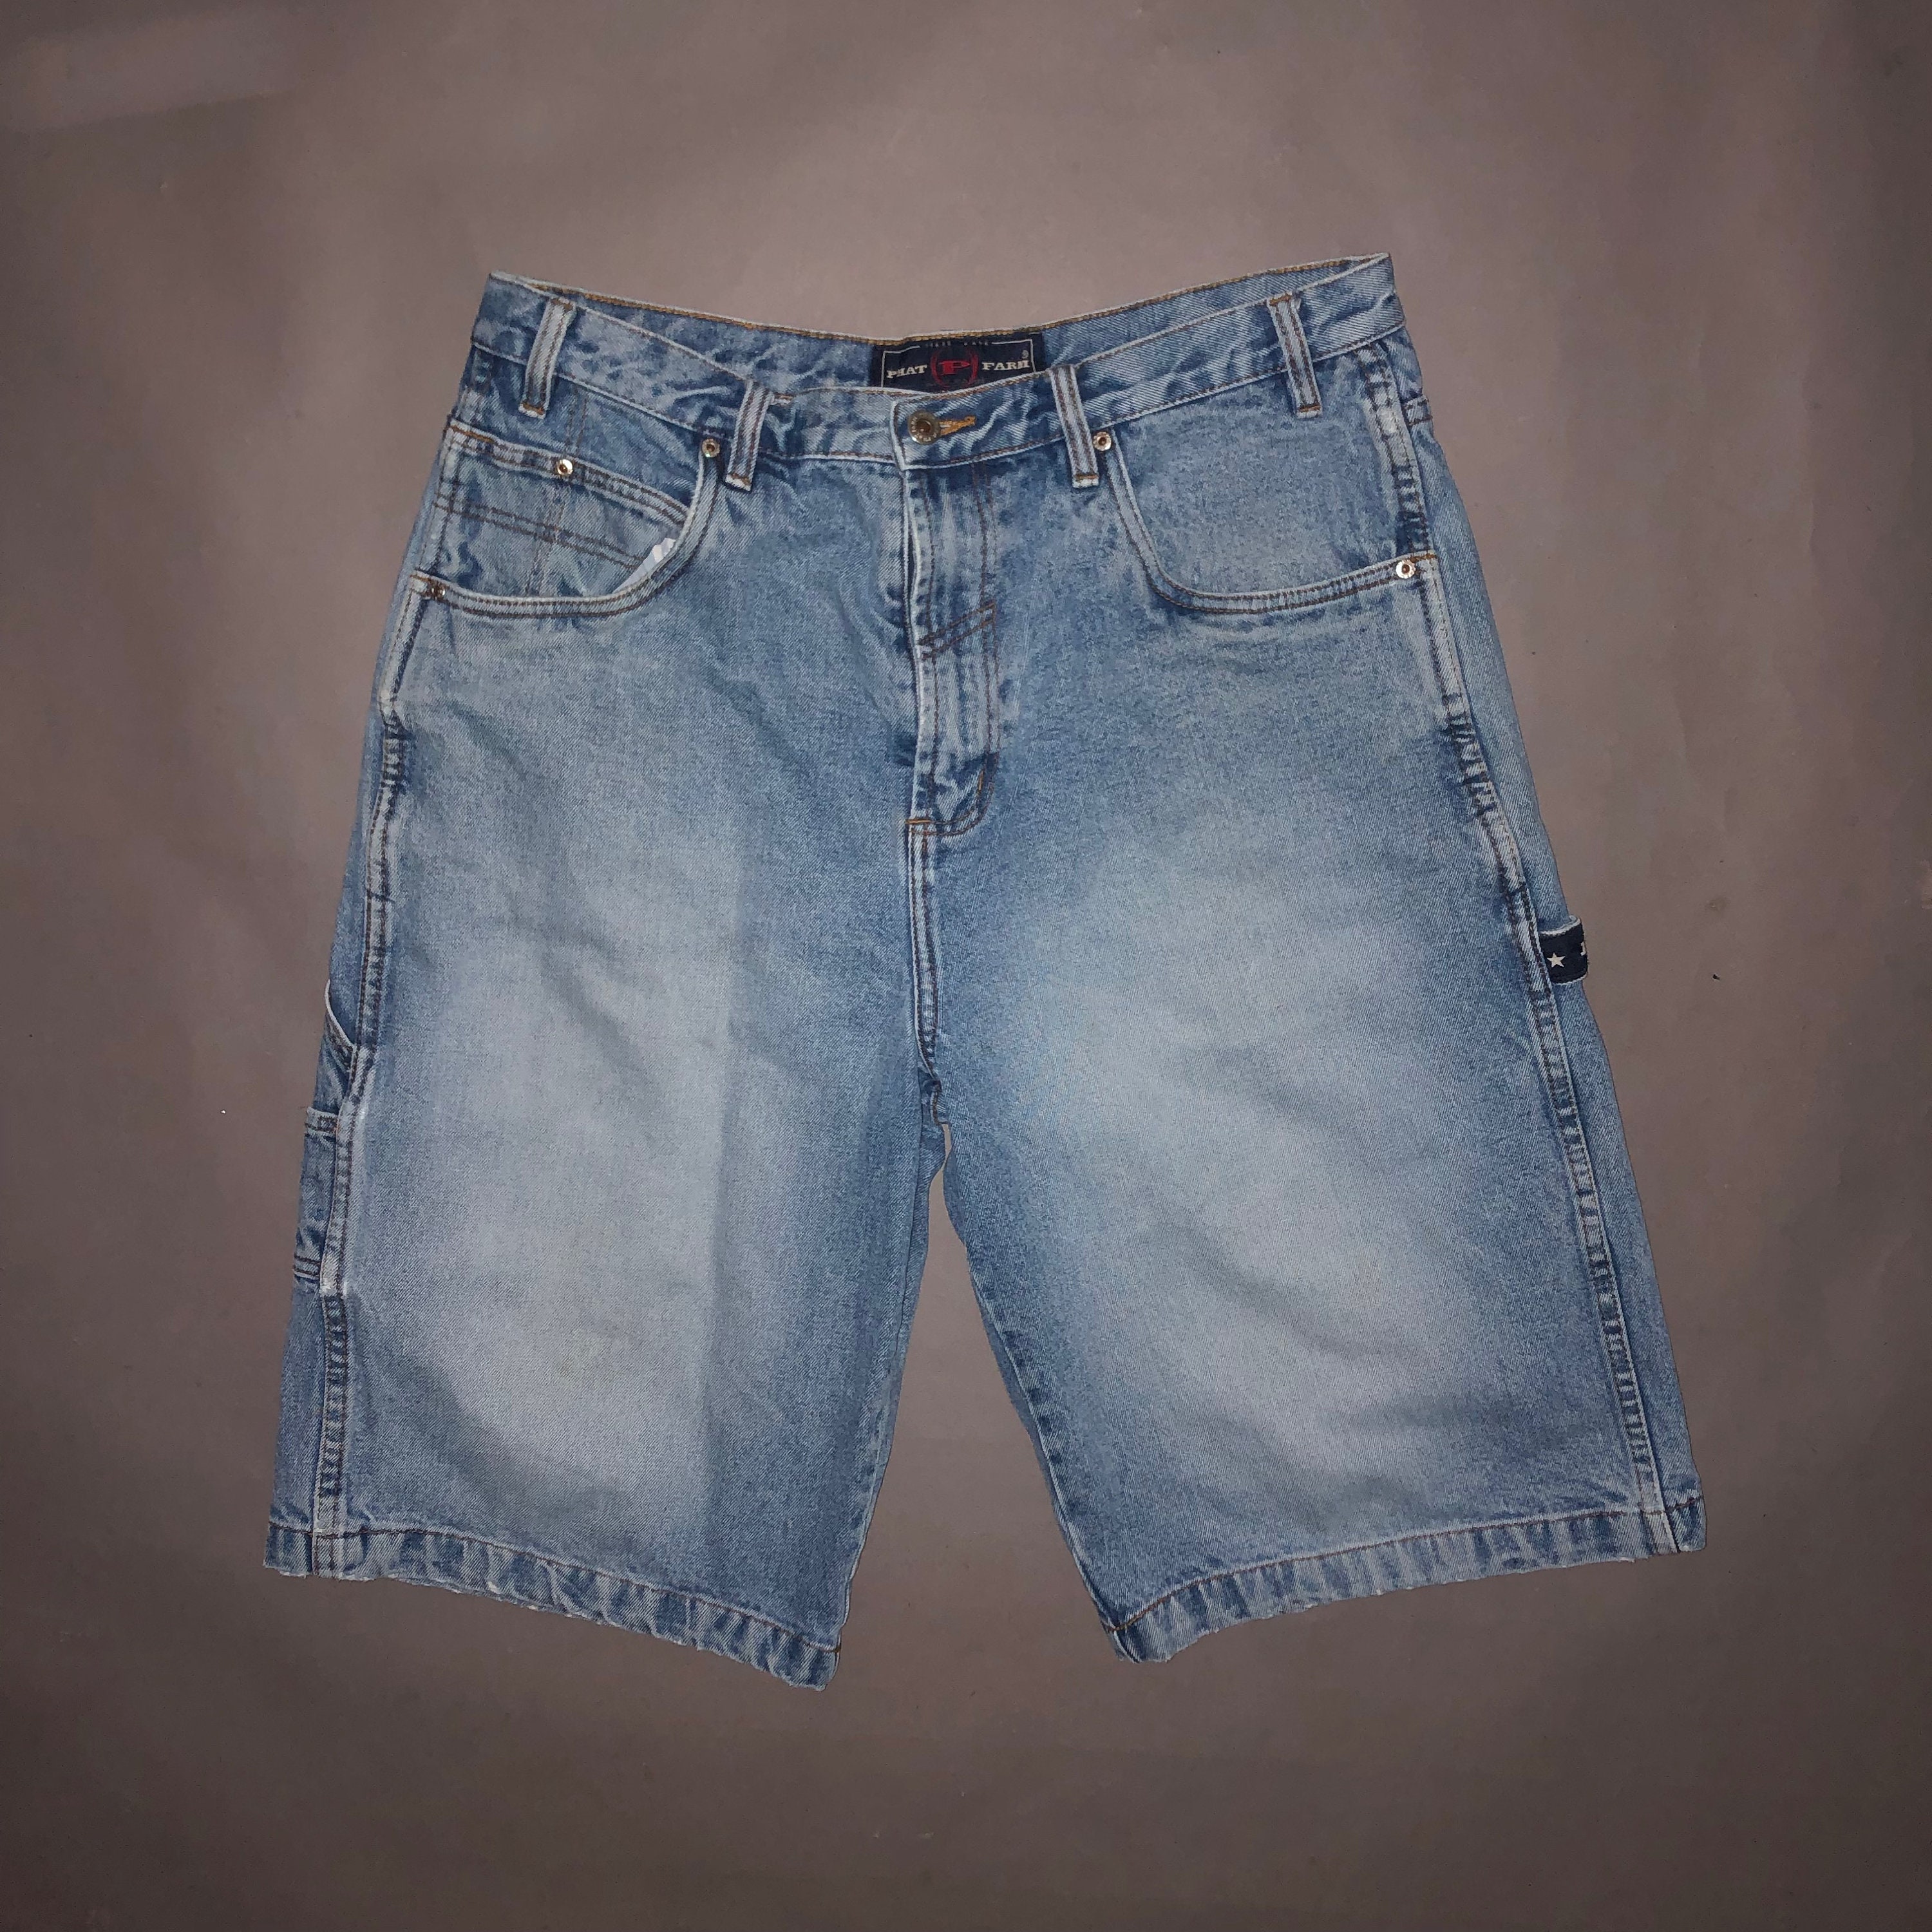 Bermudas Cargo Shorts hombres Hiphop Retro Jeans tendencia Casual